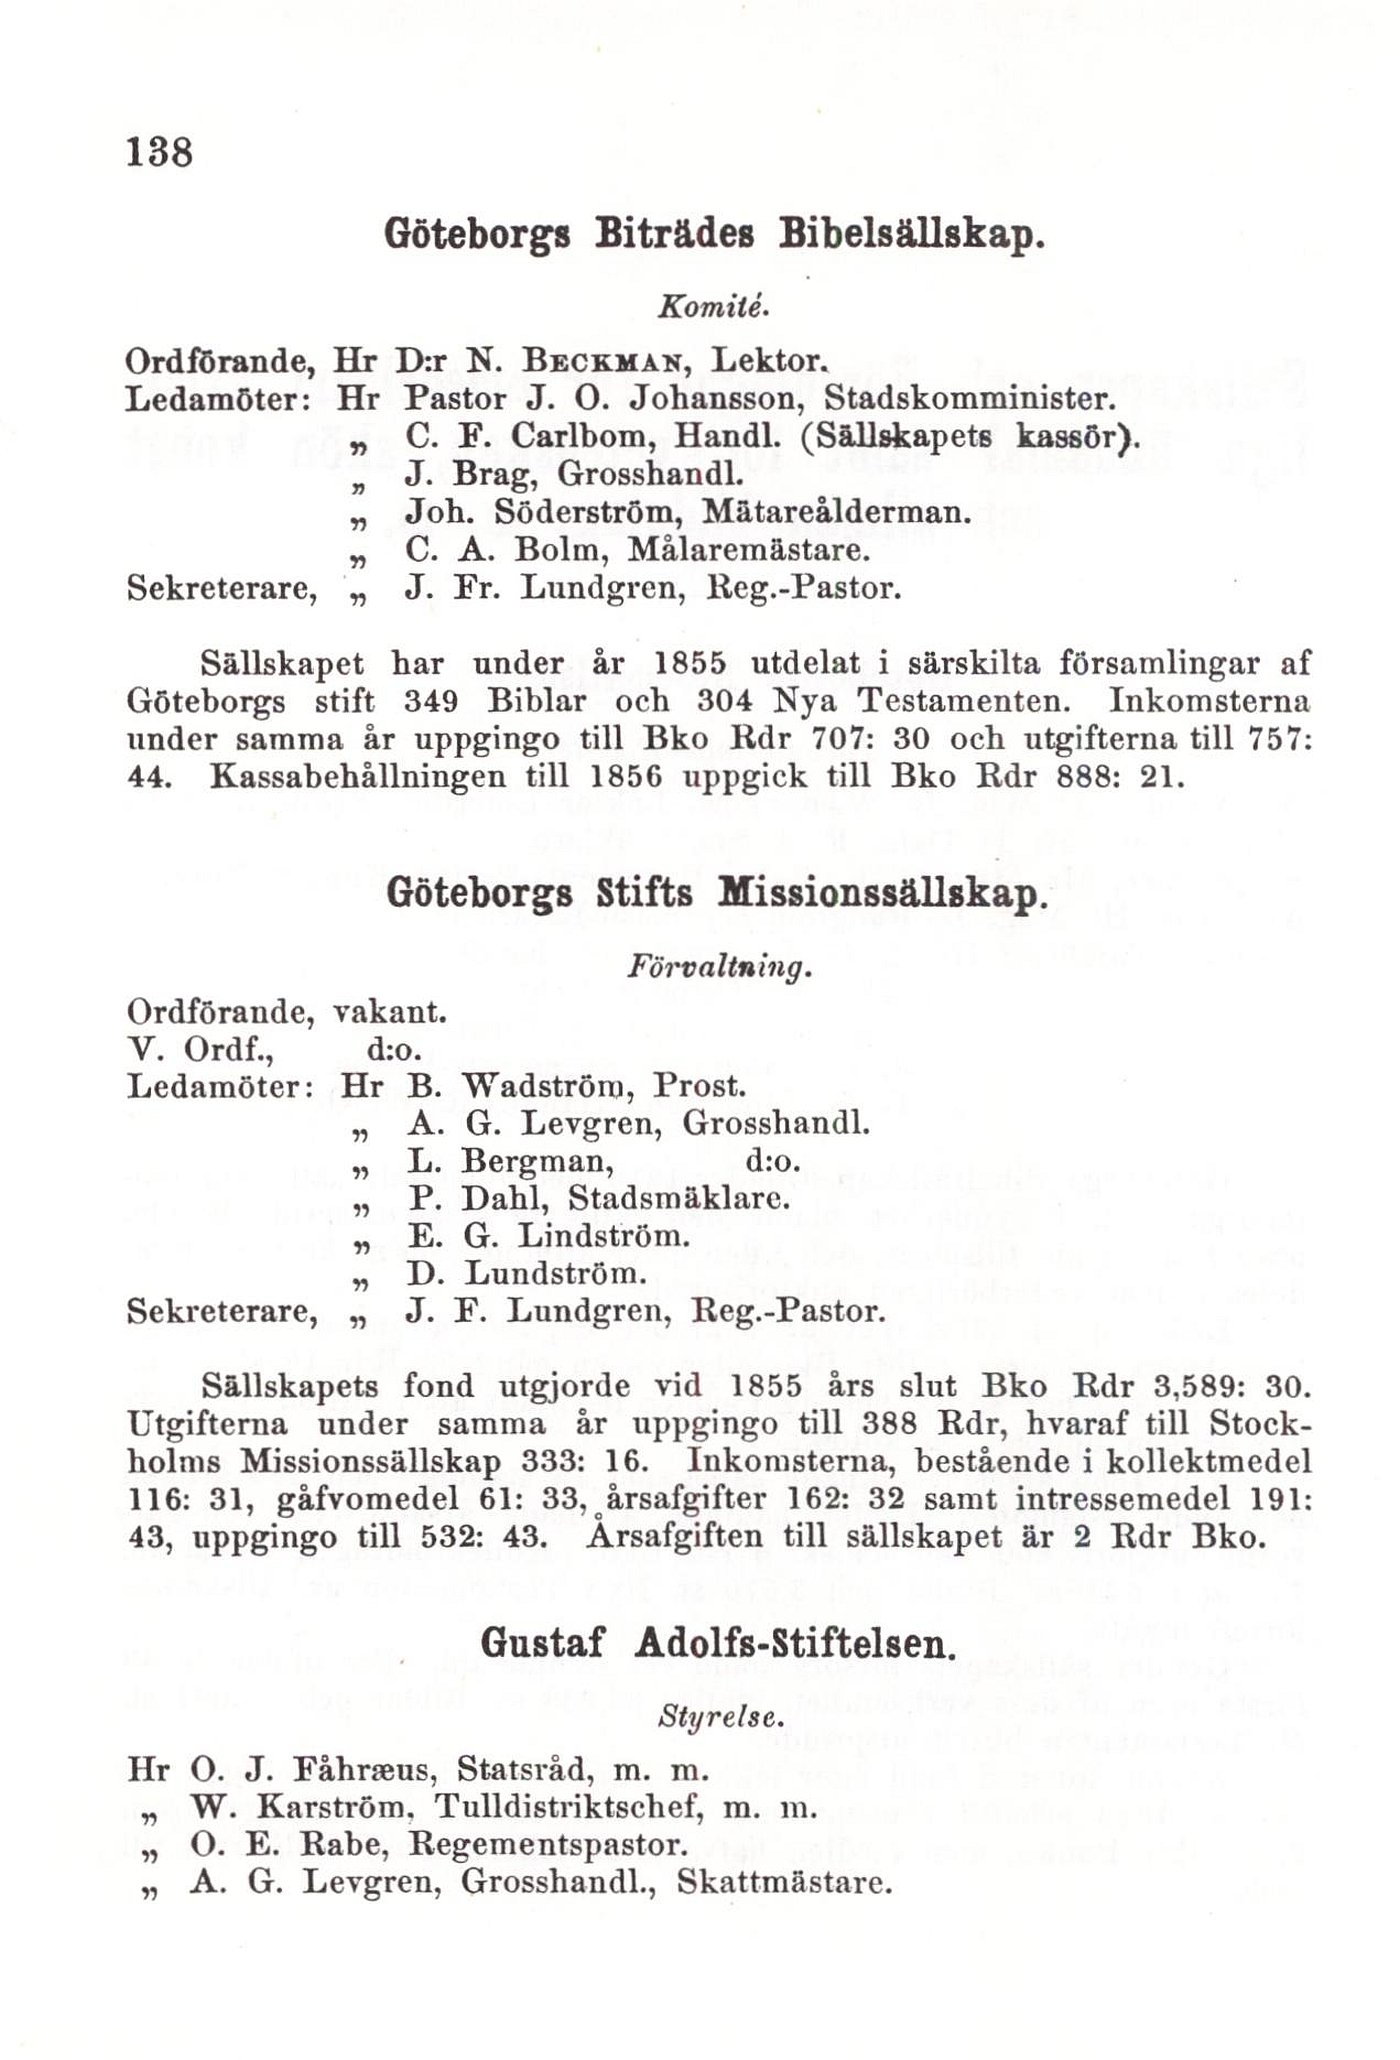 138 (Göteborgs kalender 1857)